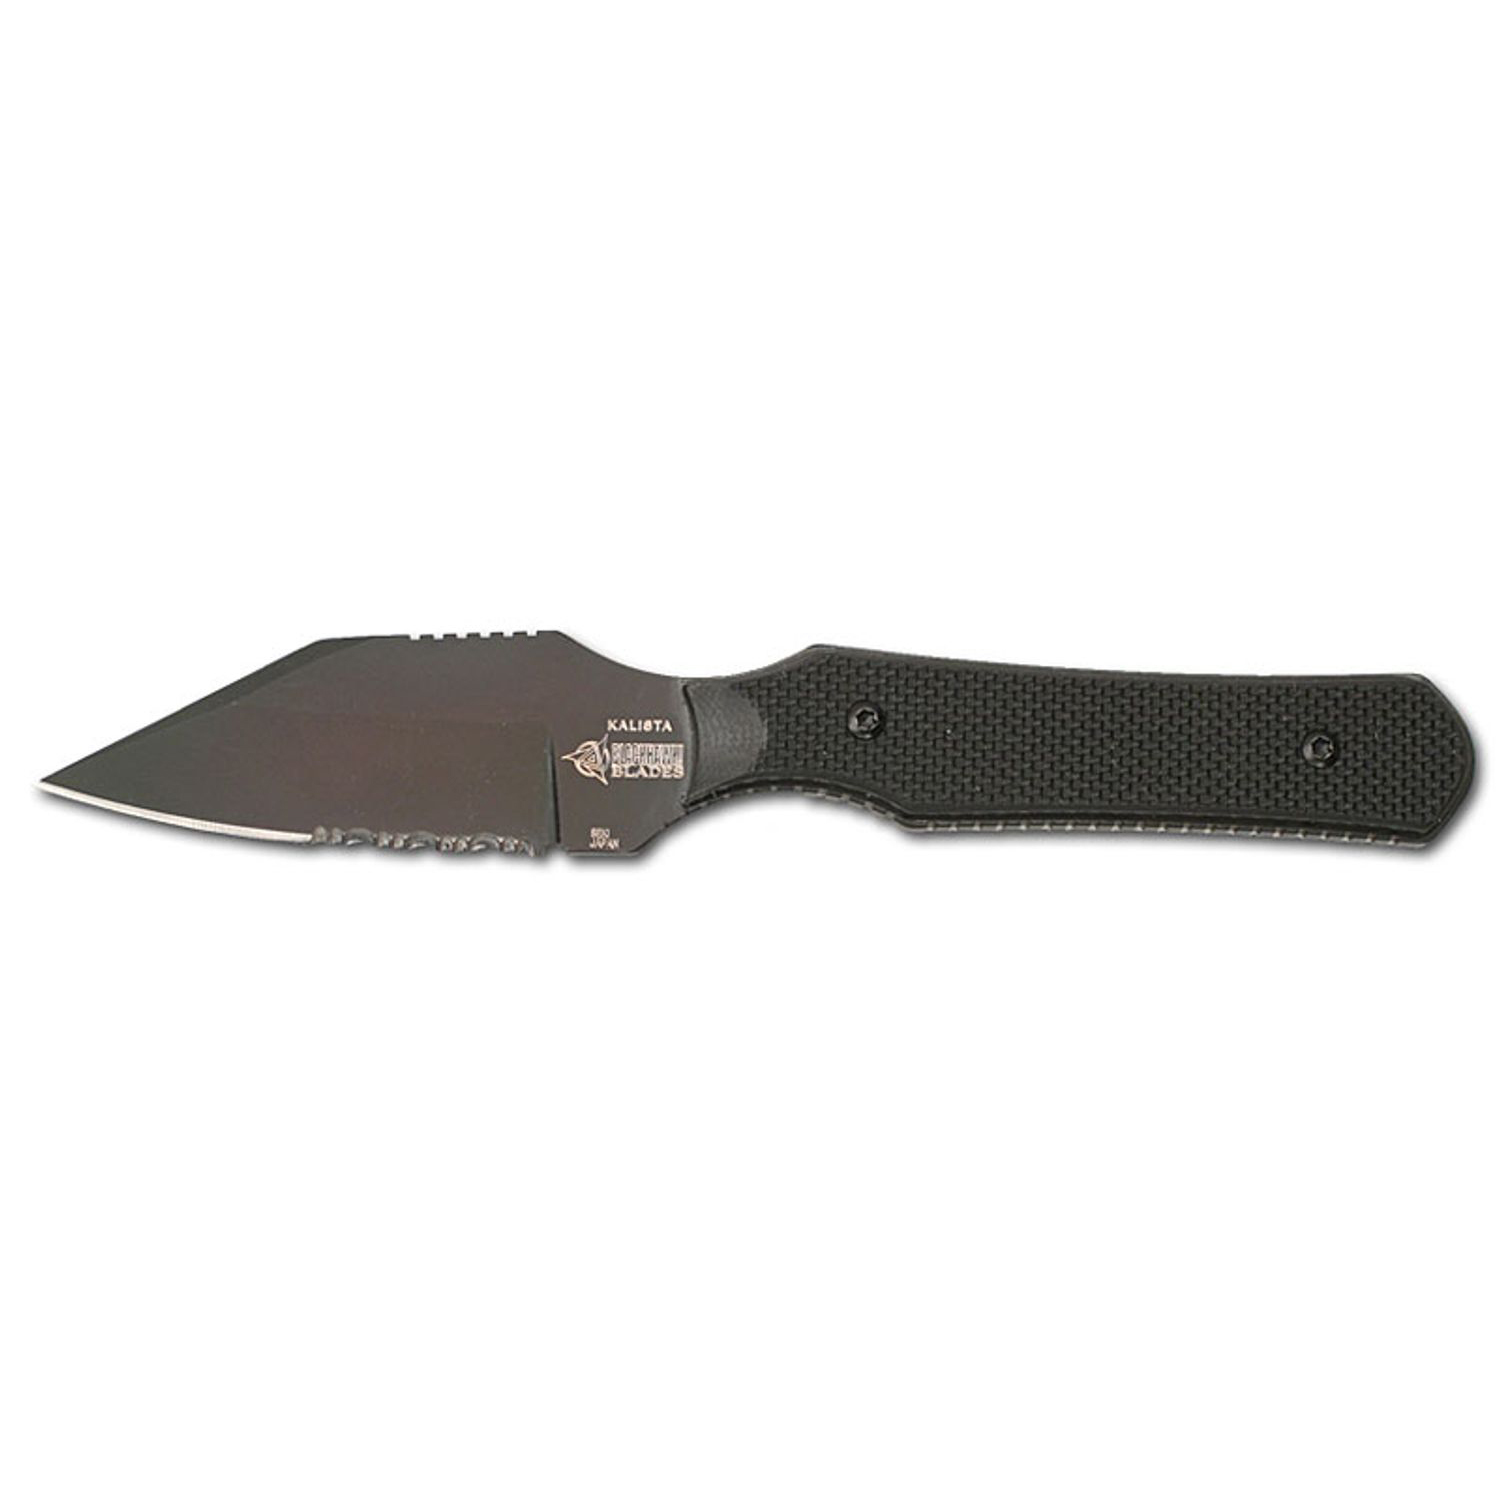 Нож Blackhawk 15KL10BK Kalista Combo Edge Knife - фото 3